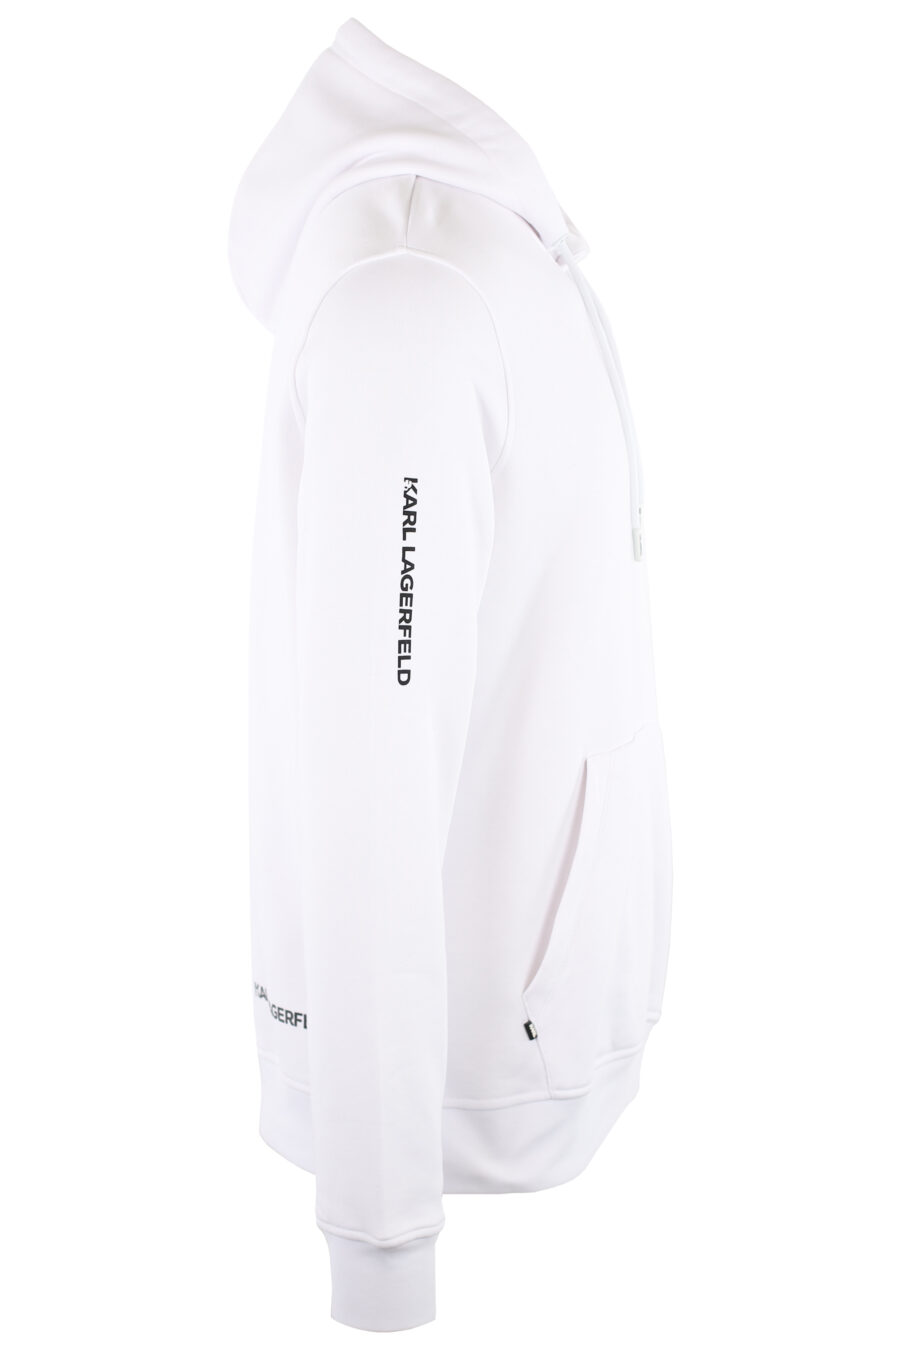 Sweatshirt branca com capuz e logótipo "ikonik" pequeno - IMG 7461